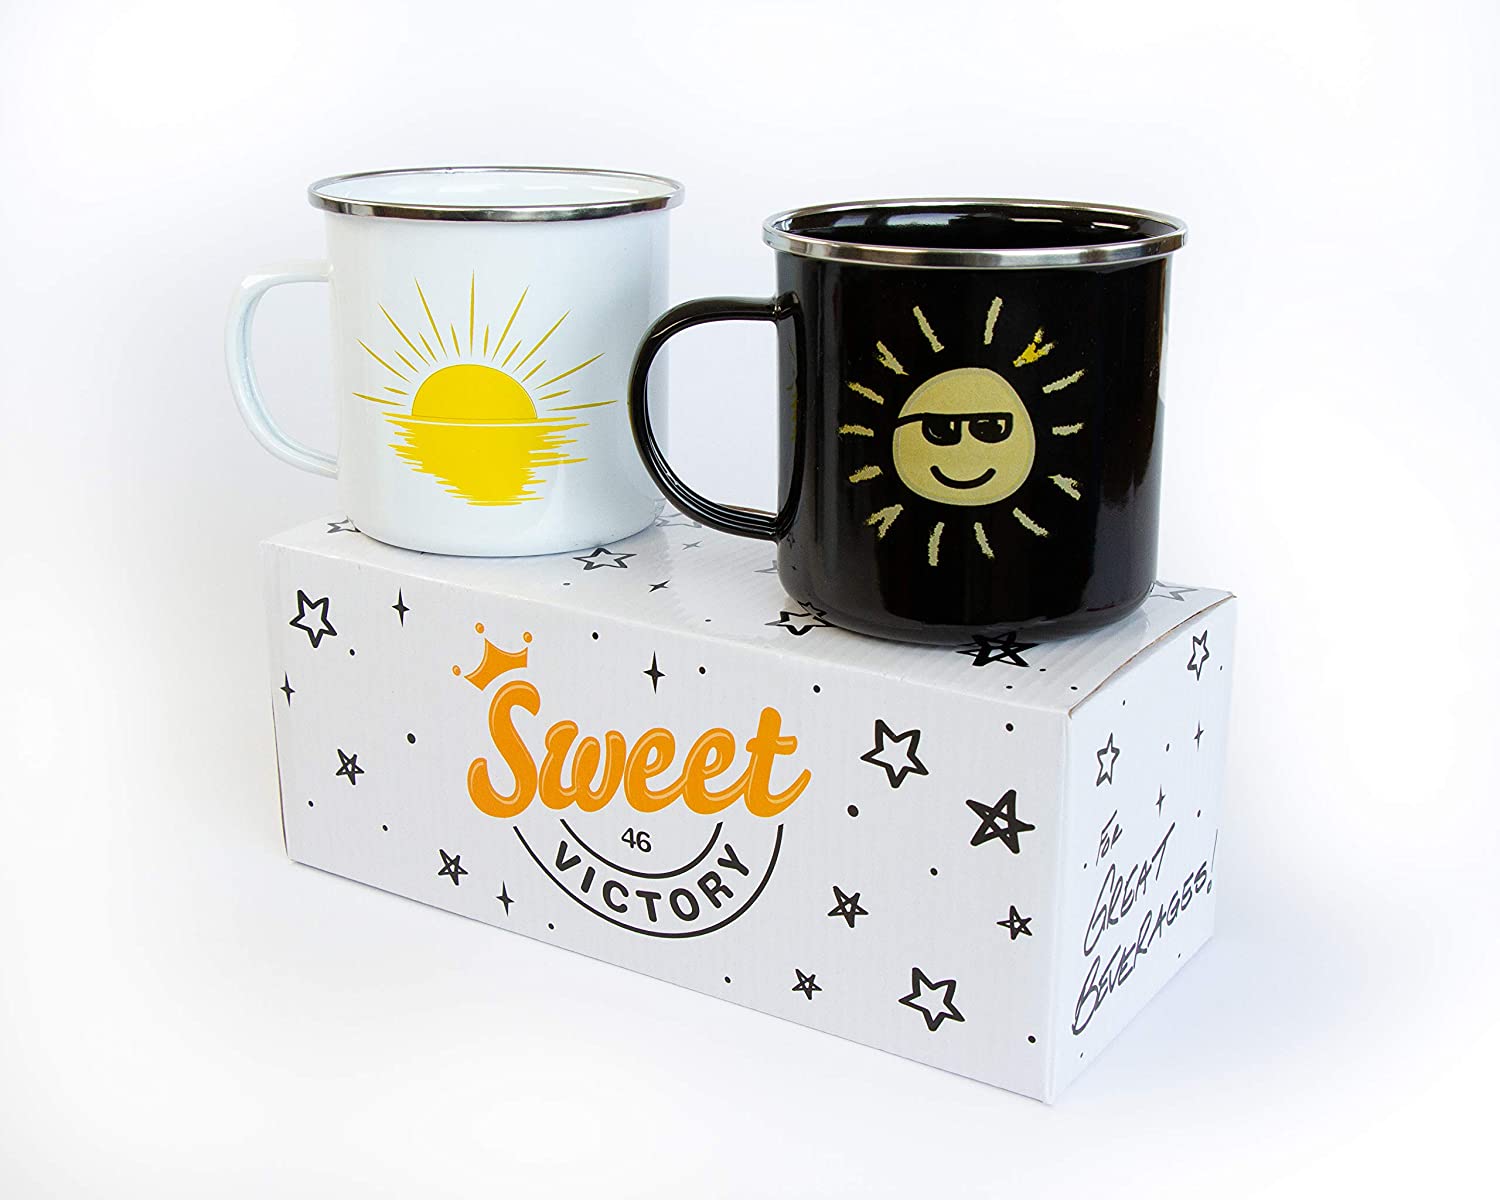 Enamel Camping Mug Set of 2 -16 oz Mugs in Gift Box - Good Morning Su –  Sweet Victory 46